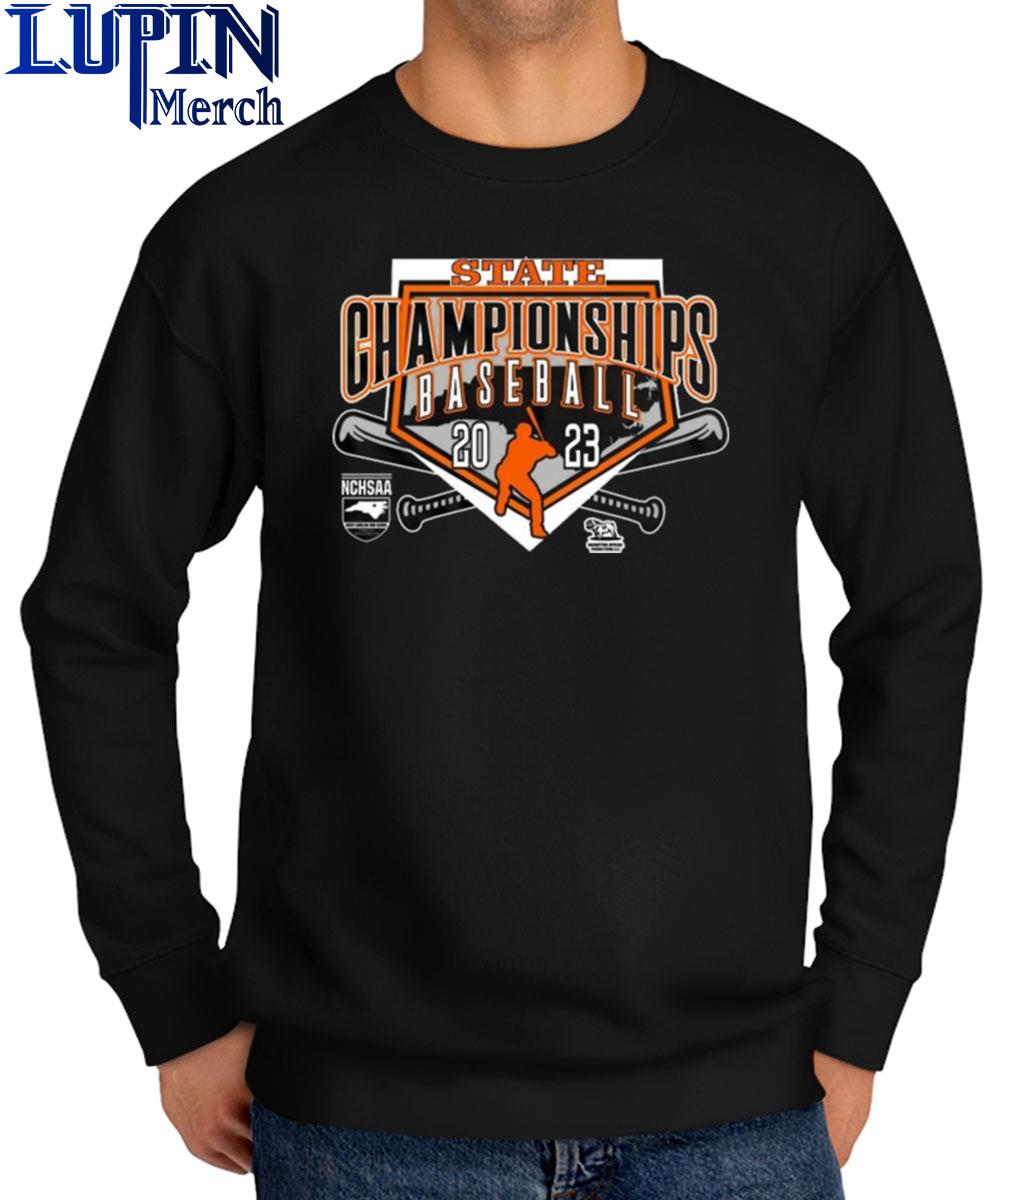 state champions baseball 2023 nchsaa north carolina high school shirt